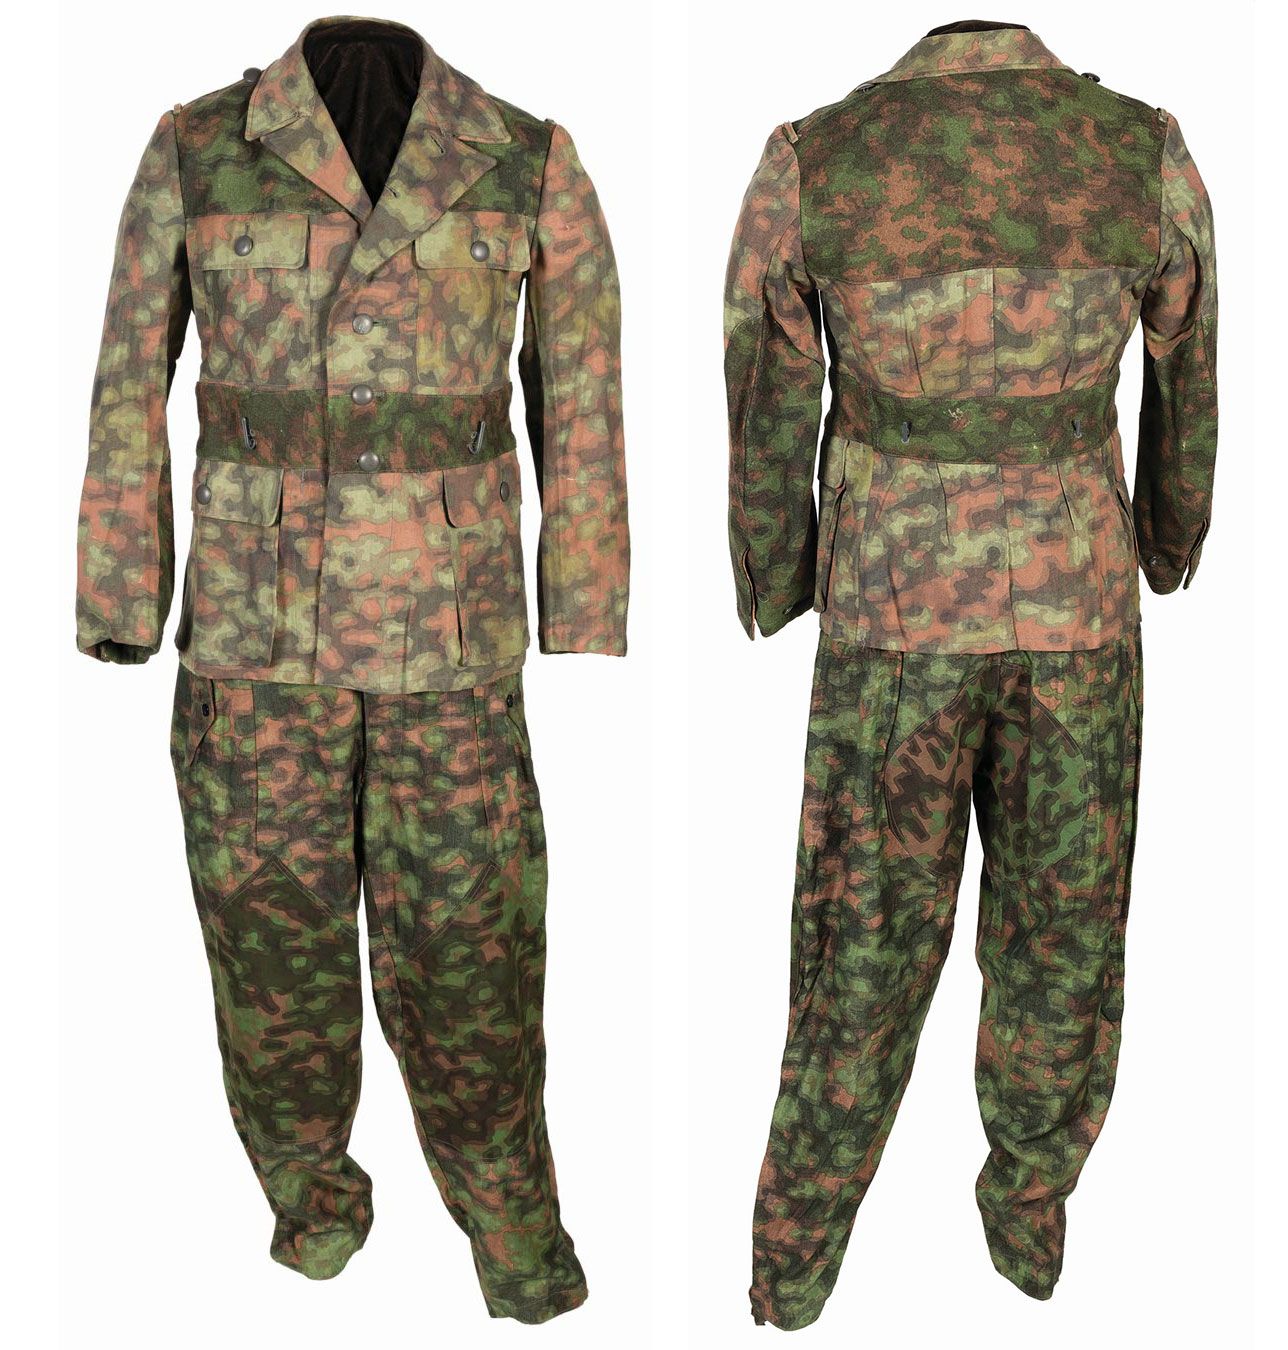 blurred edge camouflage uniform